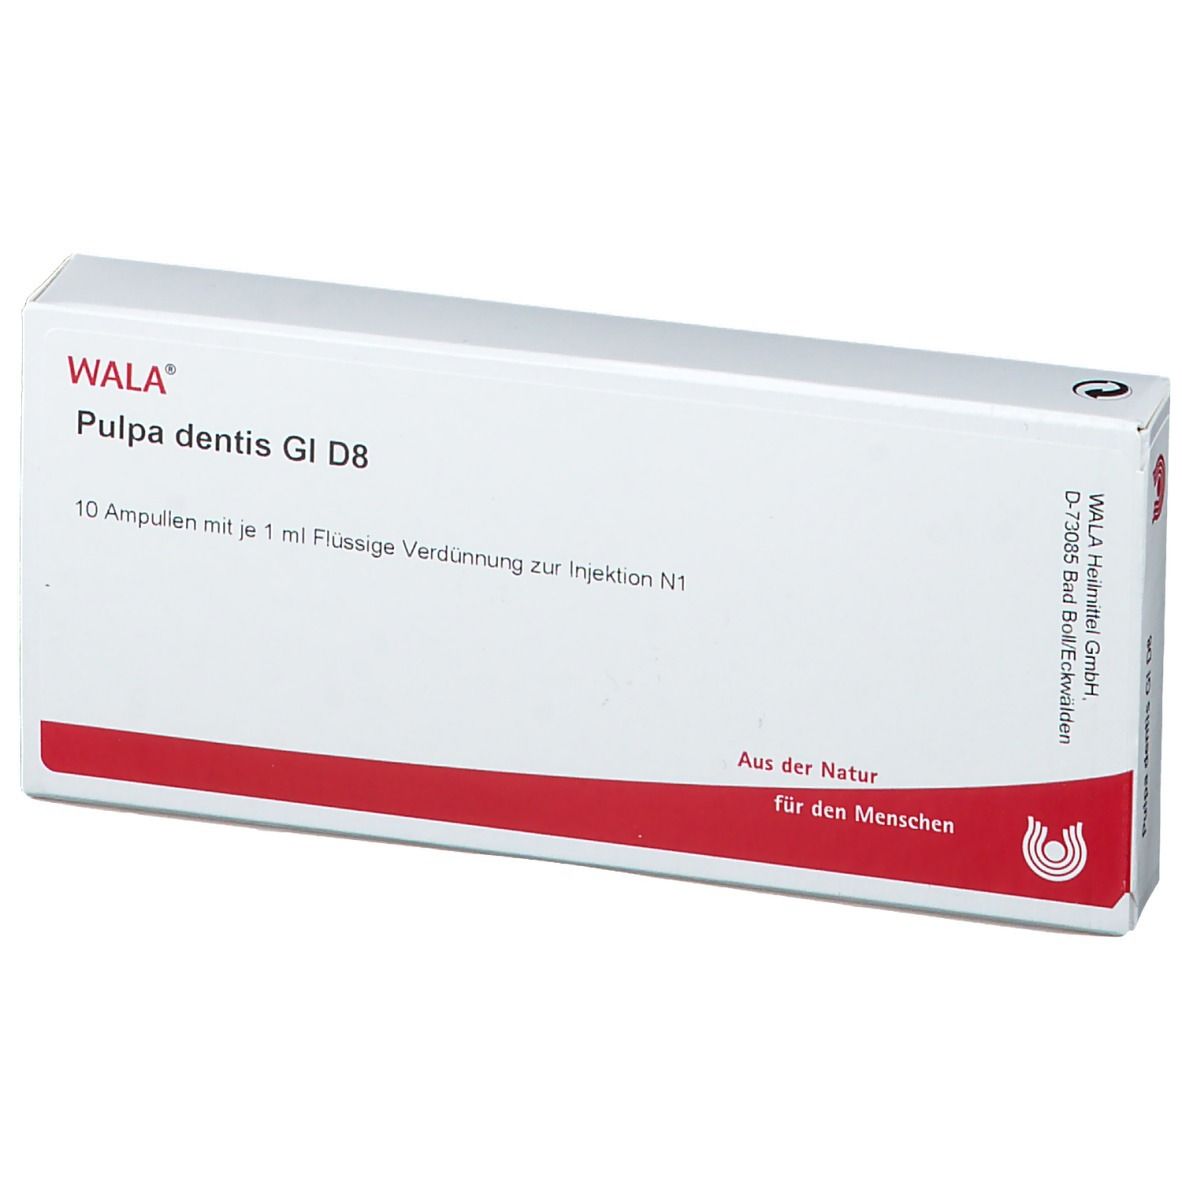 WALA® Pulpa dentis Gl D 8